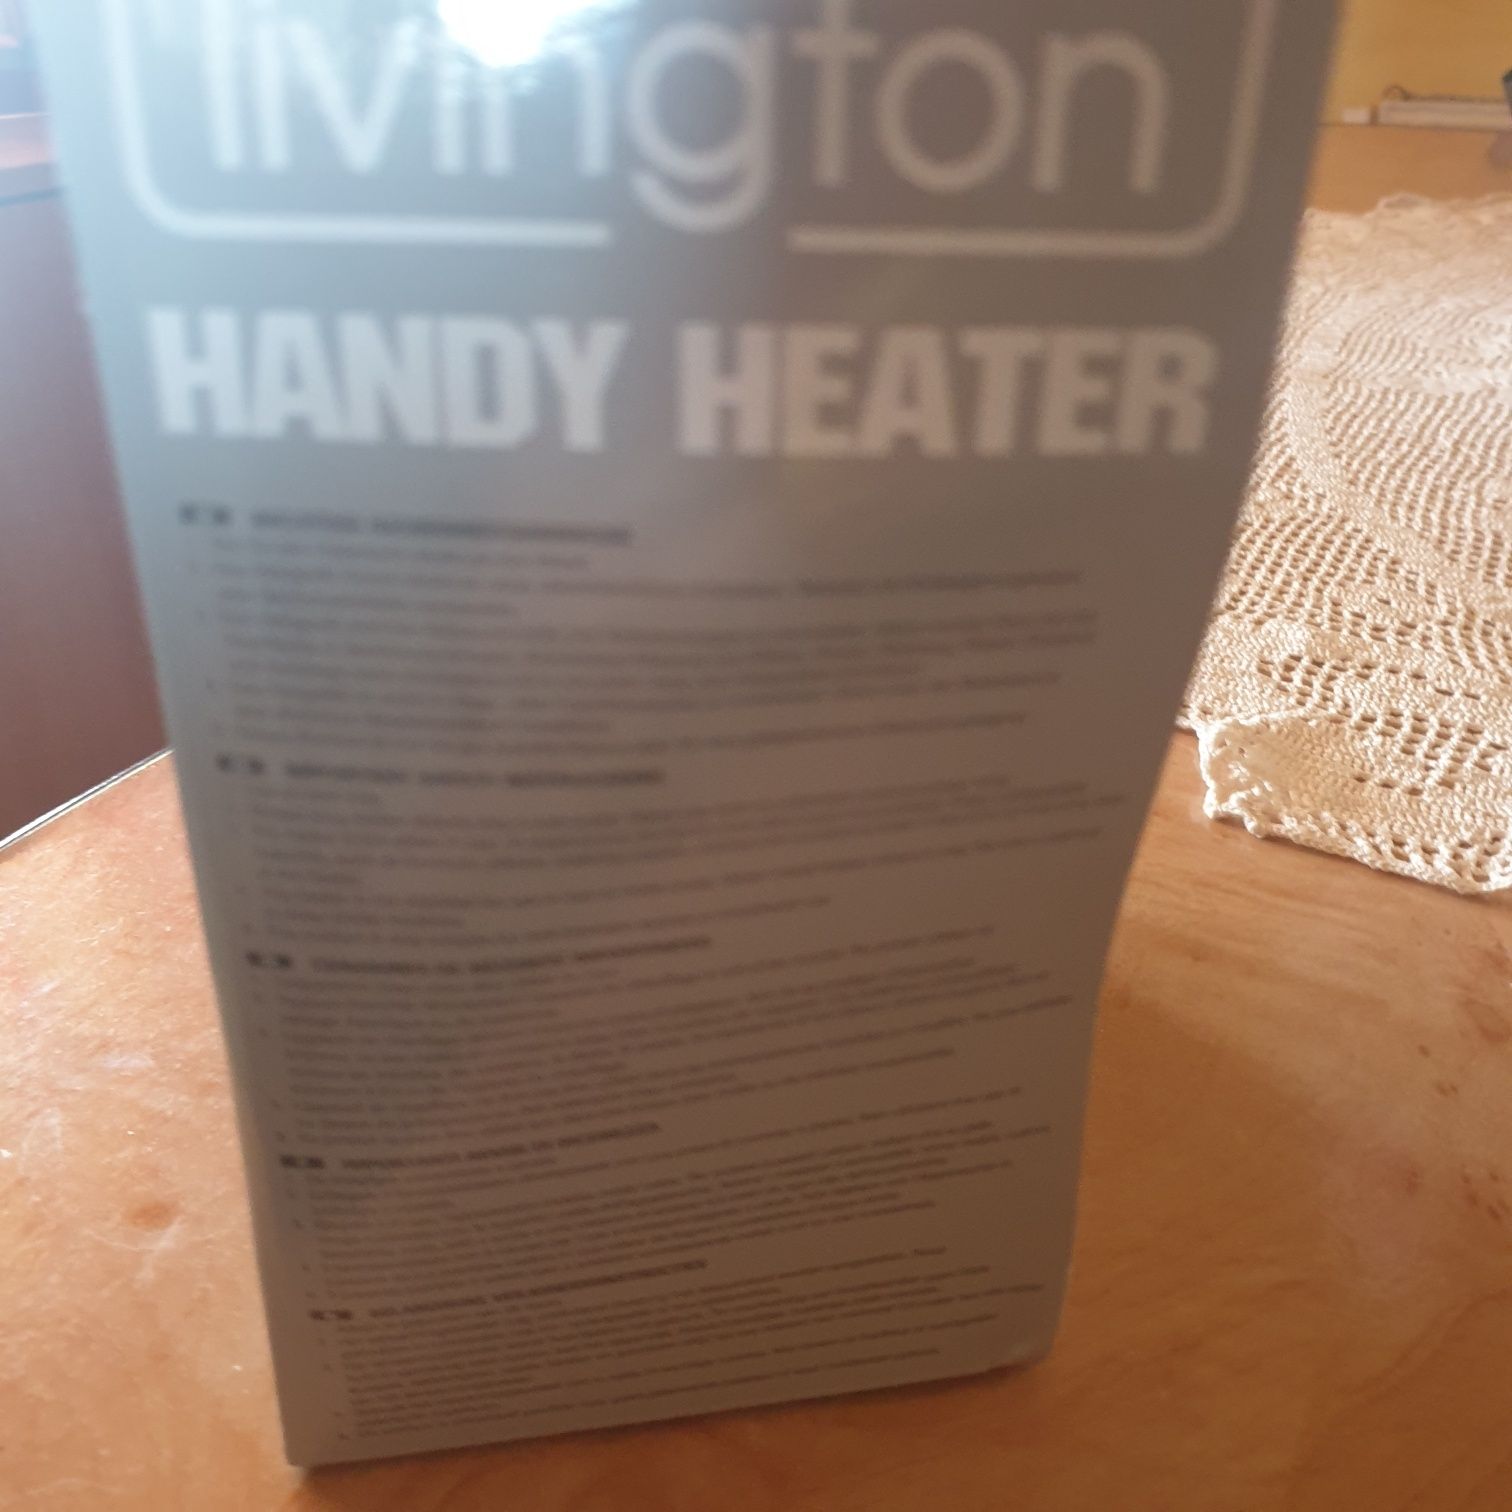 Livington Handy Heater